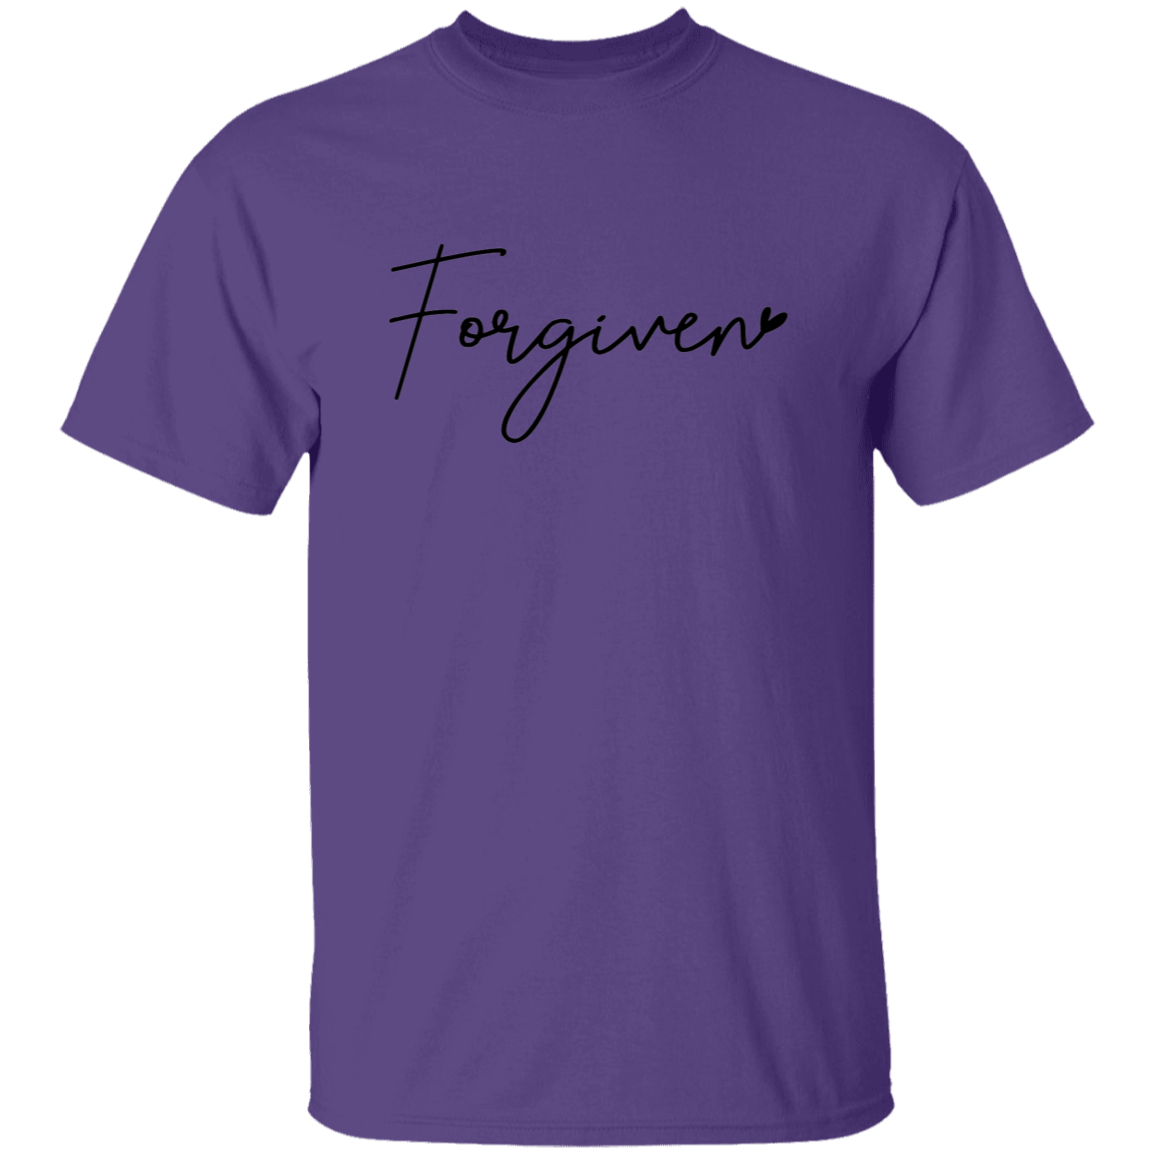 Forgiven | T-Shirt